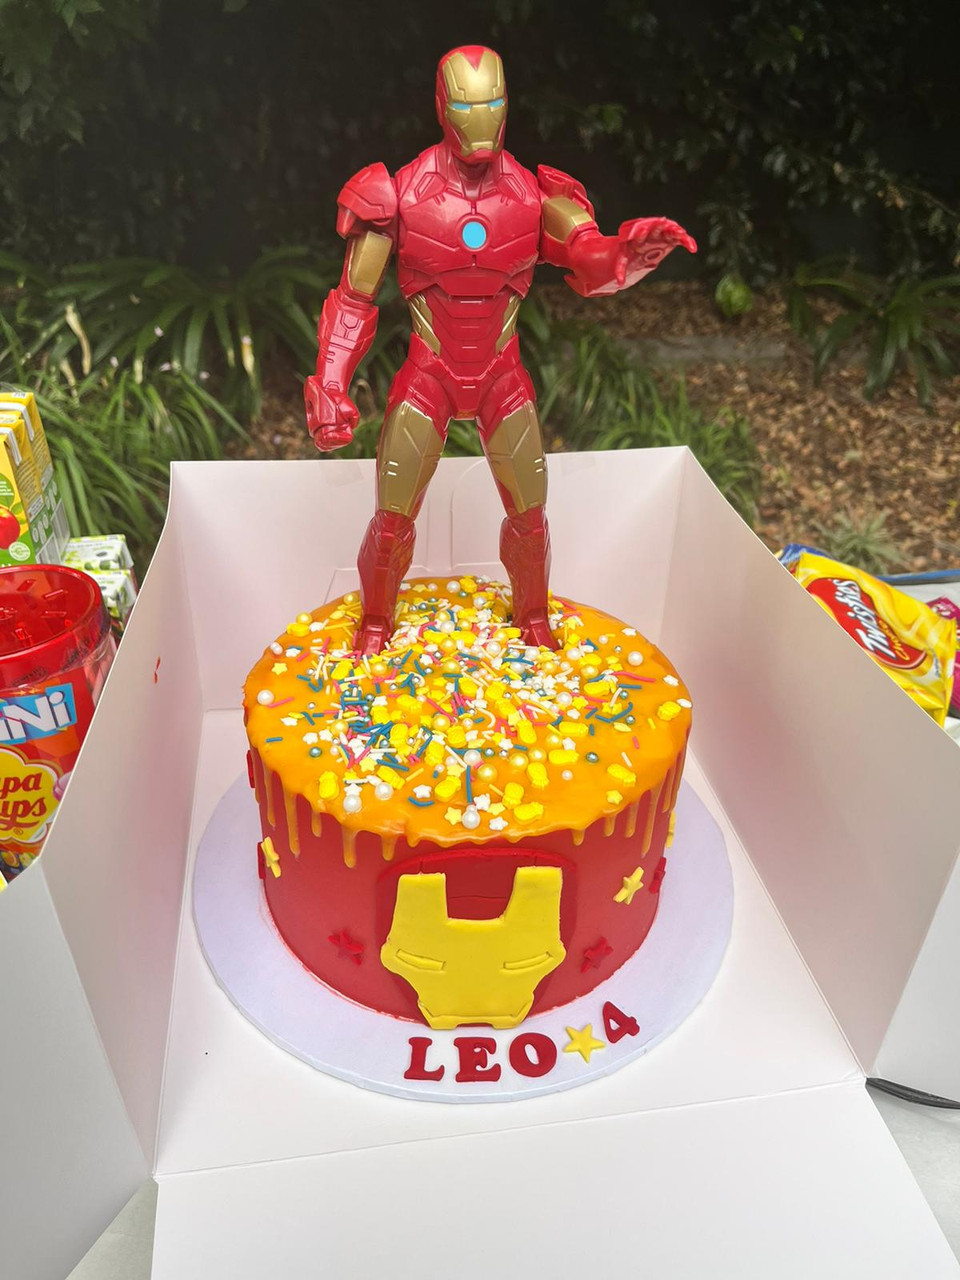 Iron Man Edible Image Cake Topper Personalized Birthday Sheet Decorati -  PartyCreationz